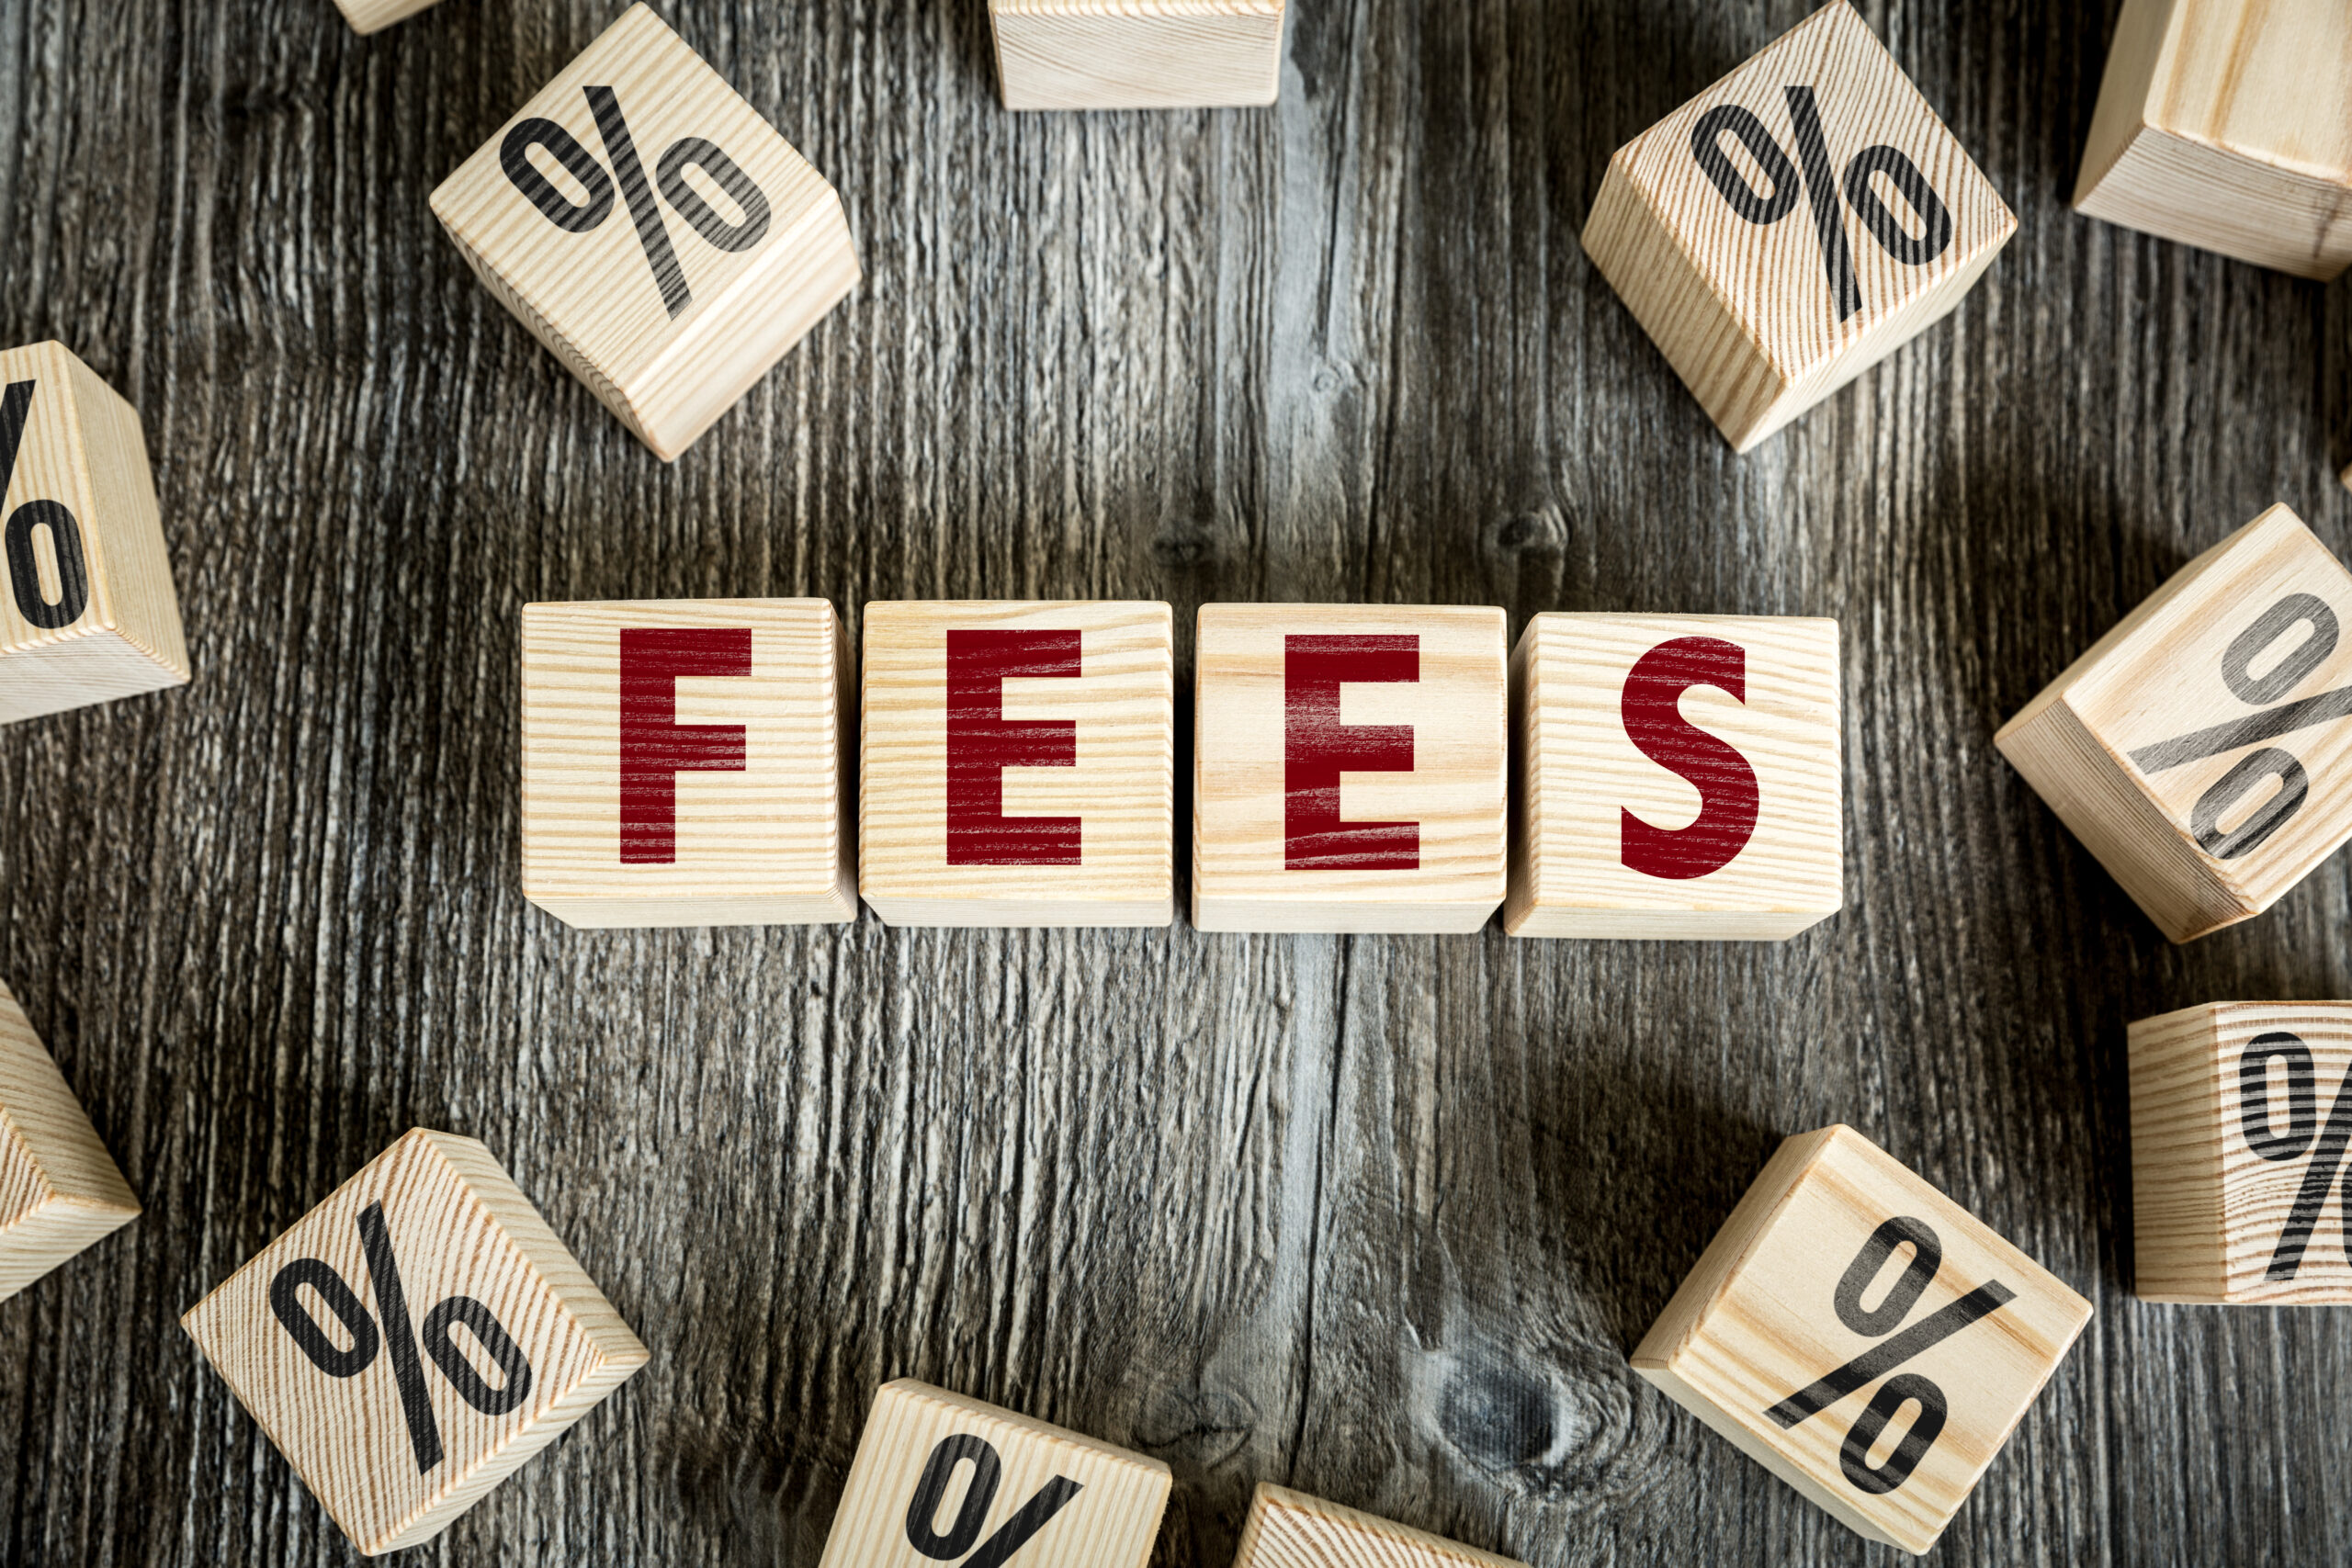 debt collection fees